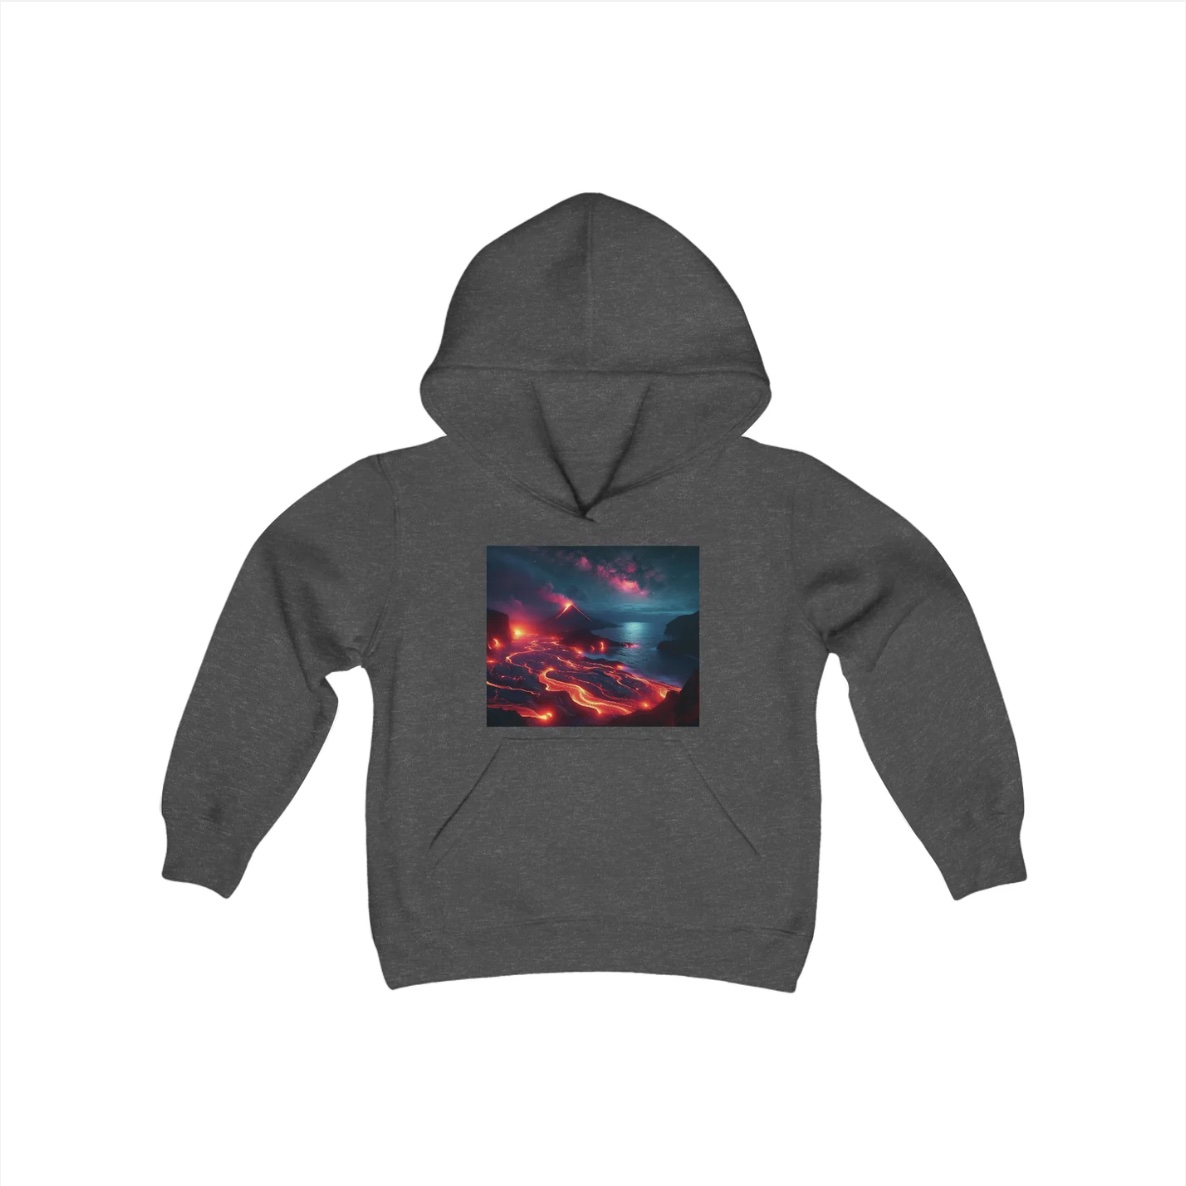 Volcano hoodie